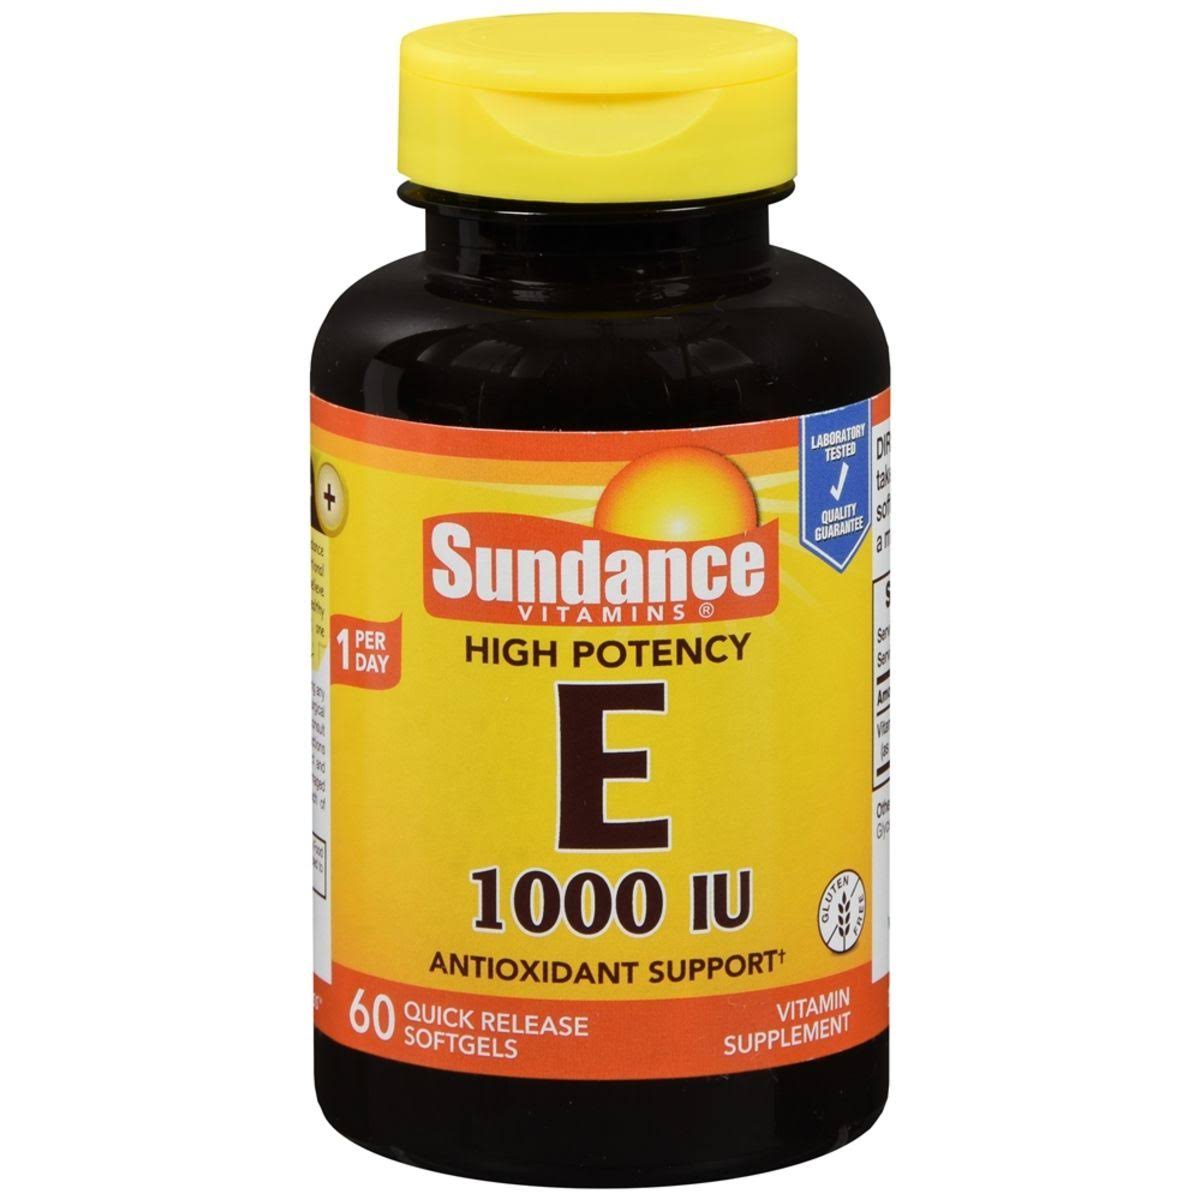 Sundance Vitamins High Potency E 1000 IU 60 Softgels Each